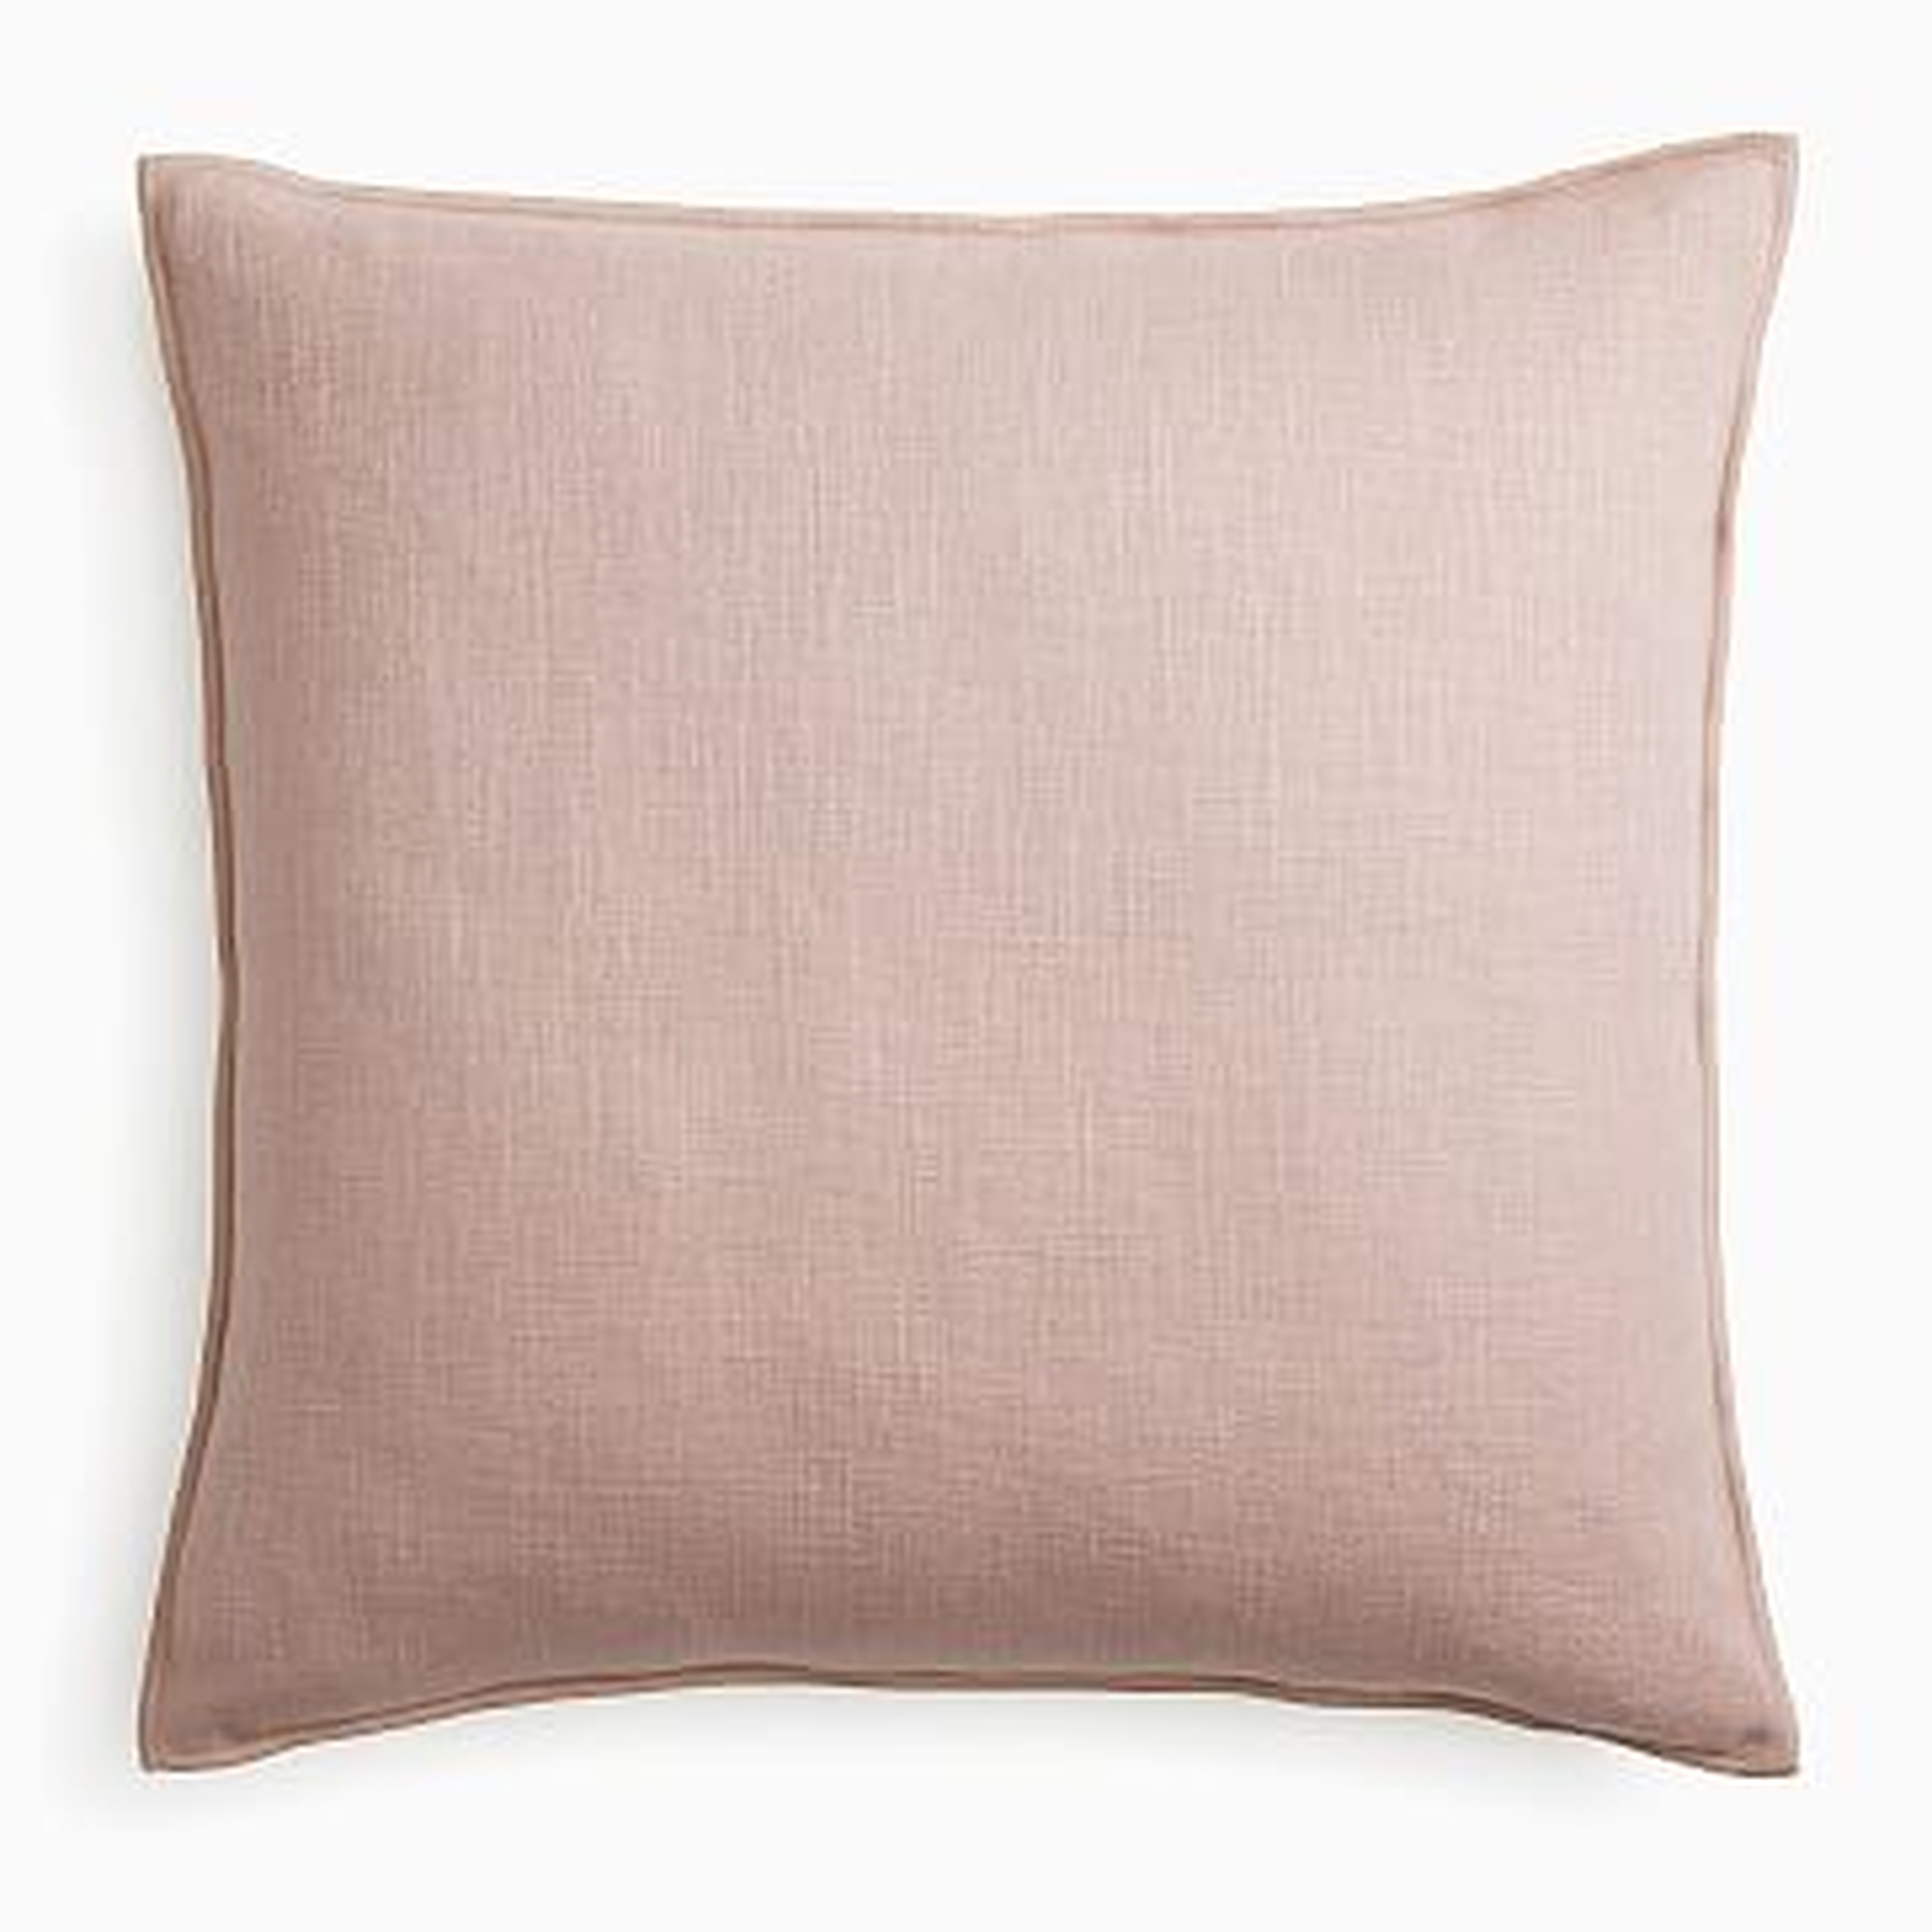 Classic Linen Pillow Cover, 24"x24" - West Elm